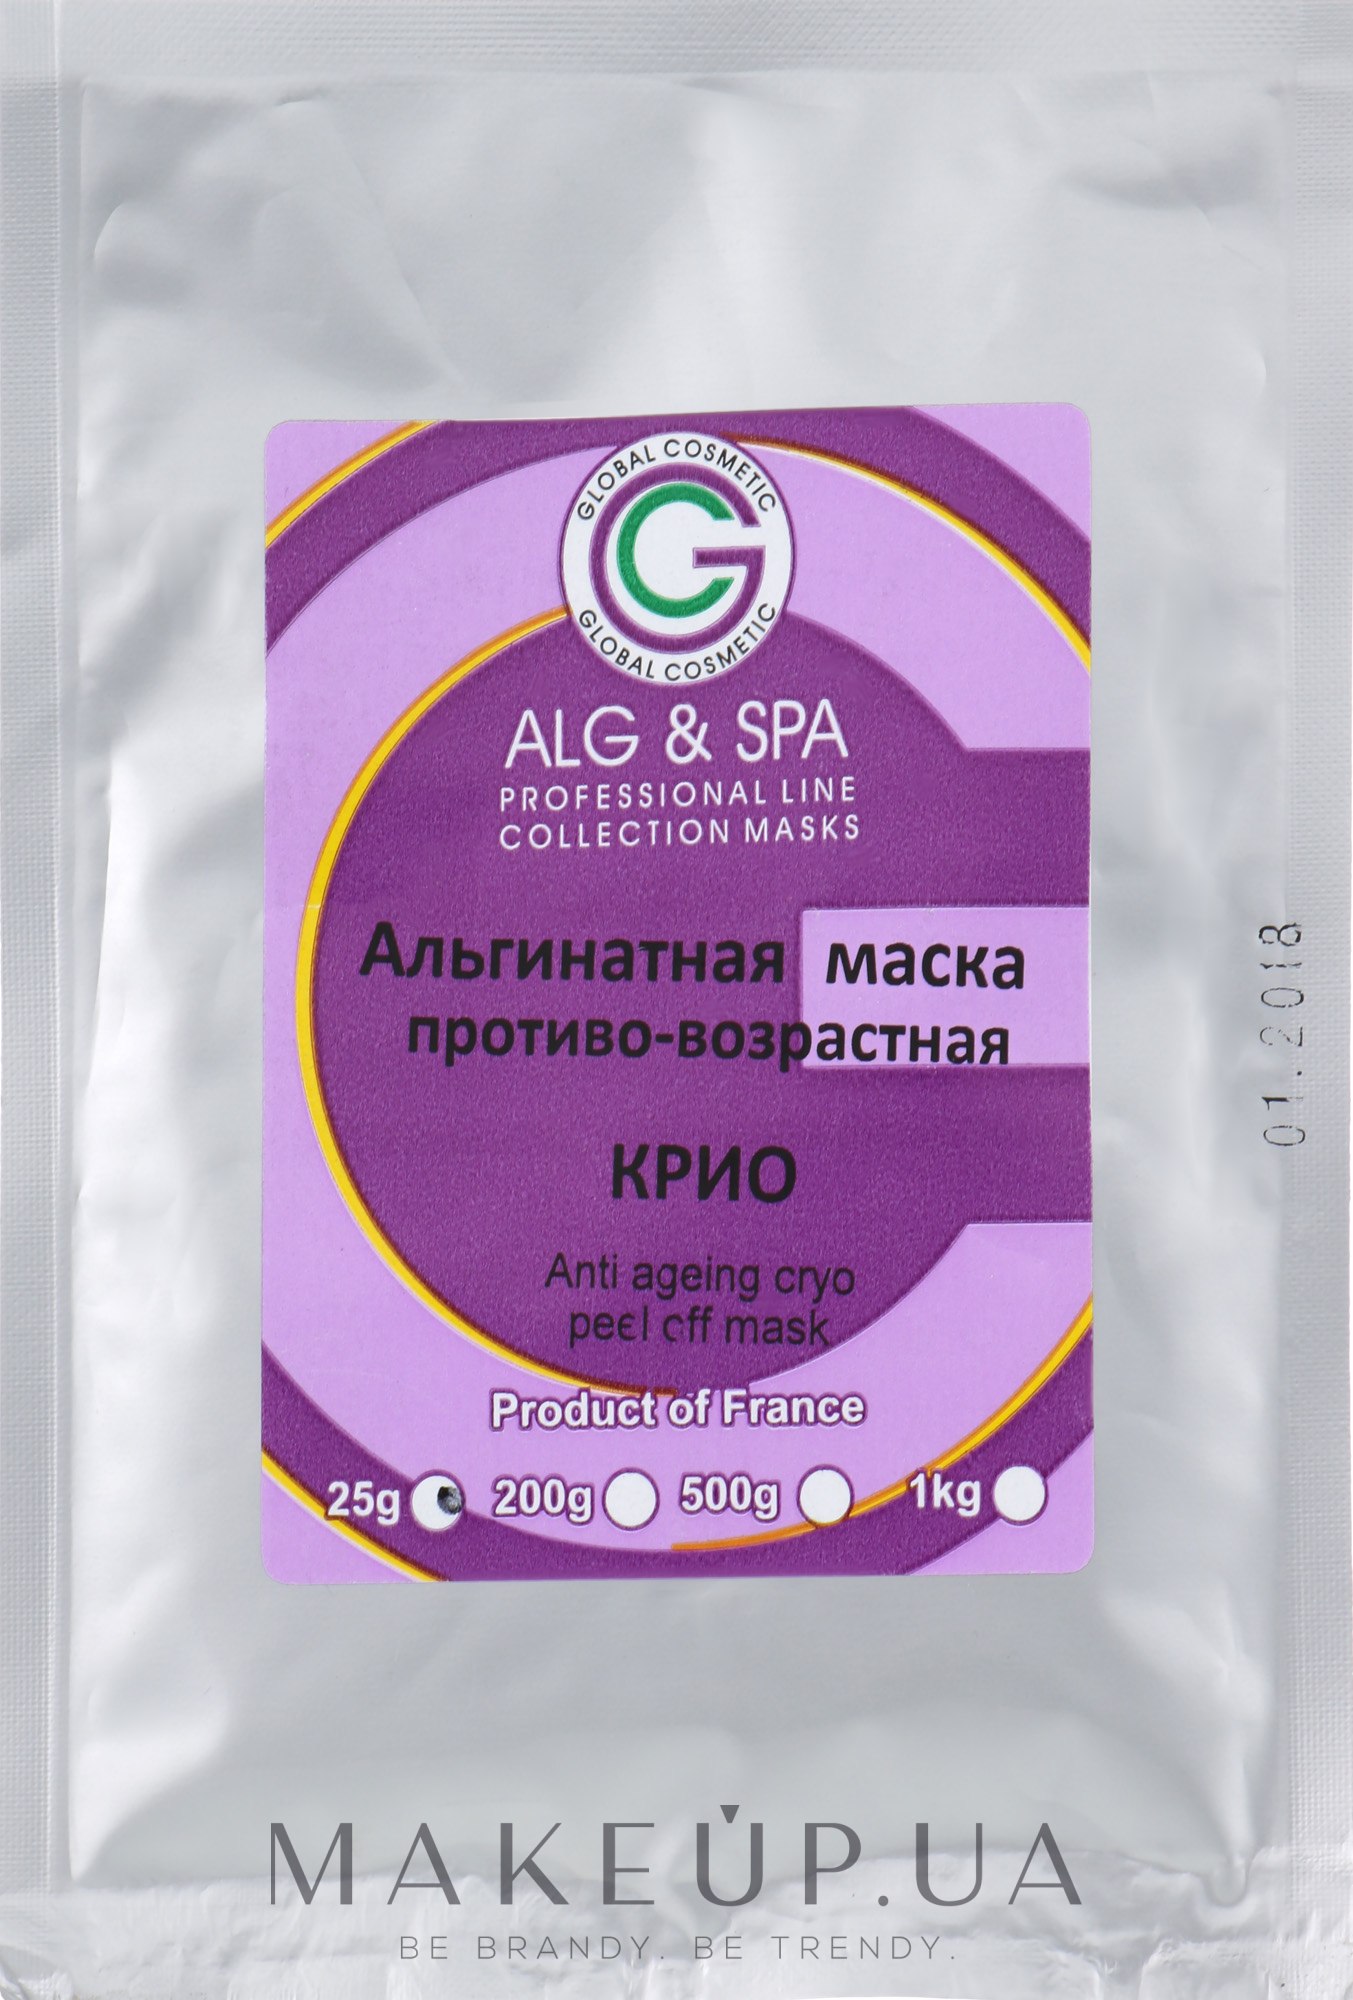 Альгинатная маска "Крио" противовозрастная - ALG & SPA Professional Line Collection Masks Anti Ageing Cryo Peel off Mask — фото 25g